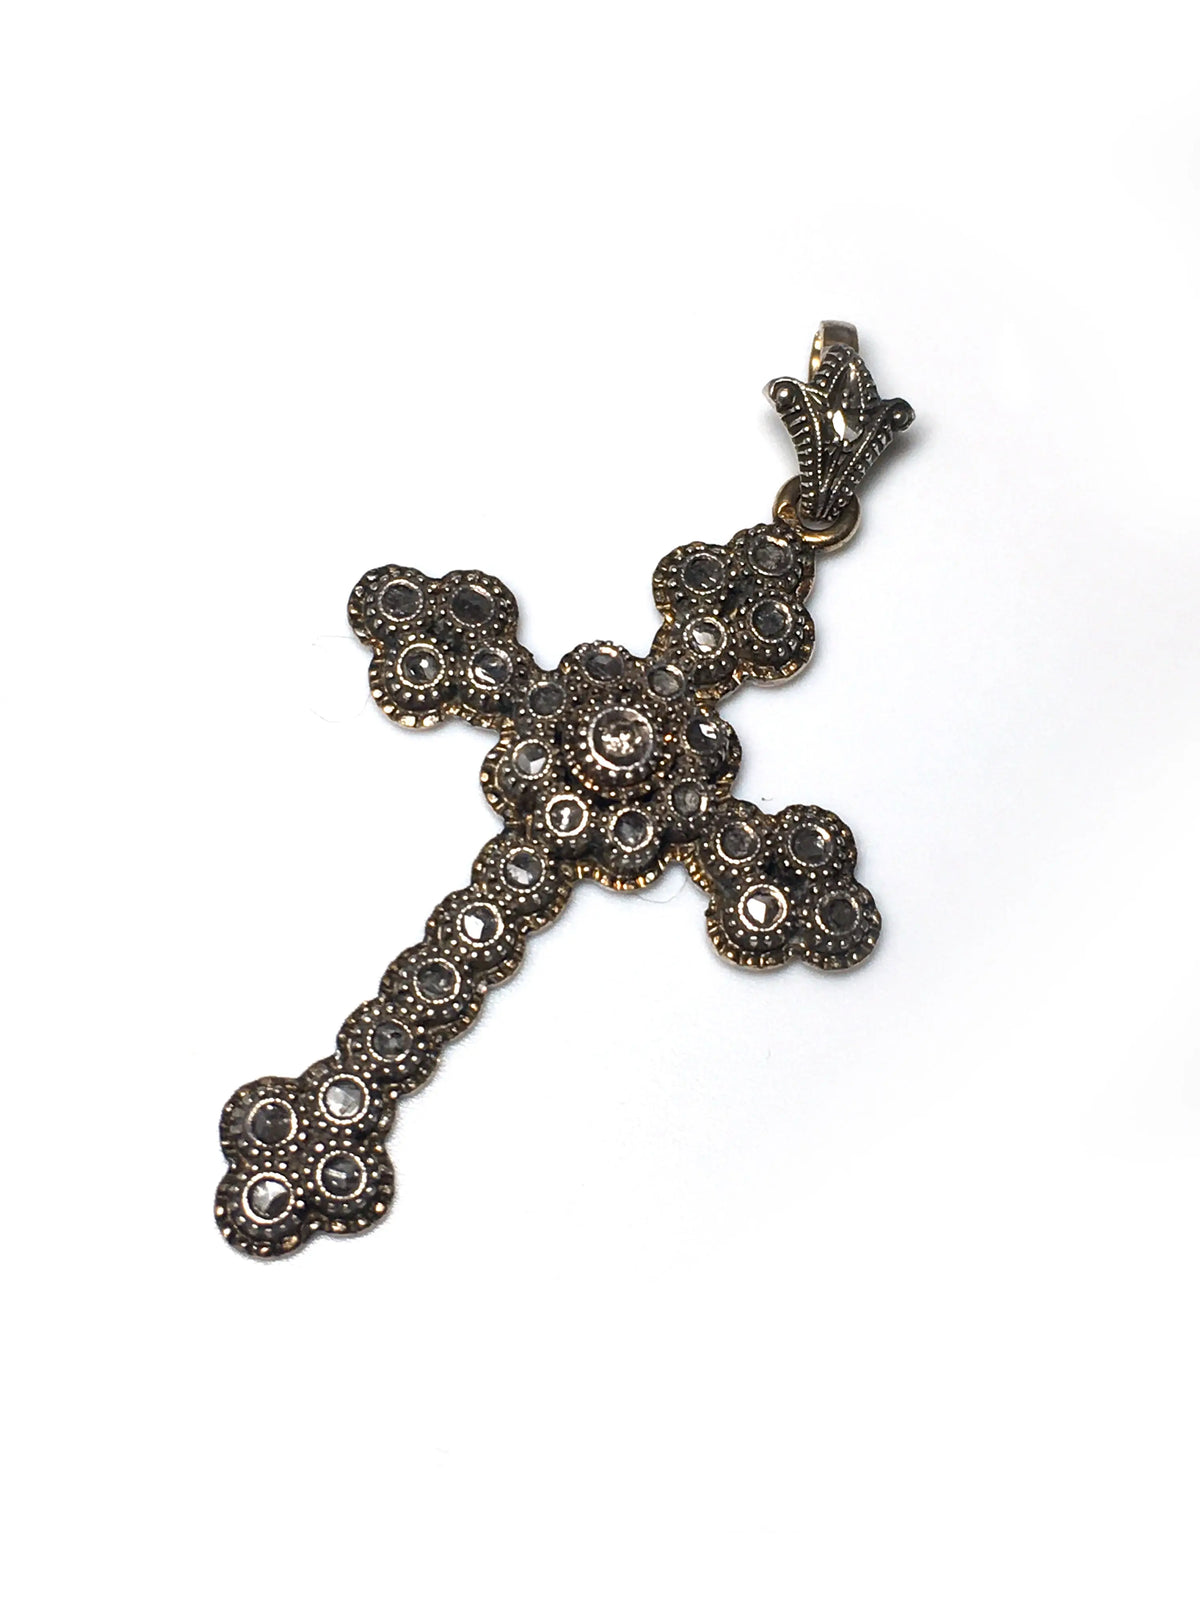 Georgian Cross circa 1850-1860s